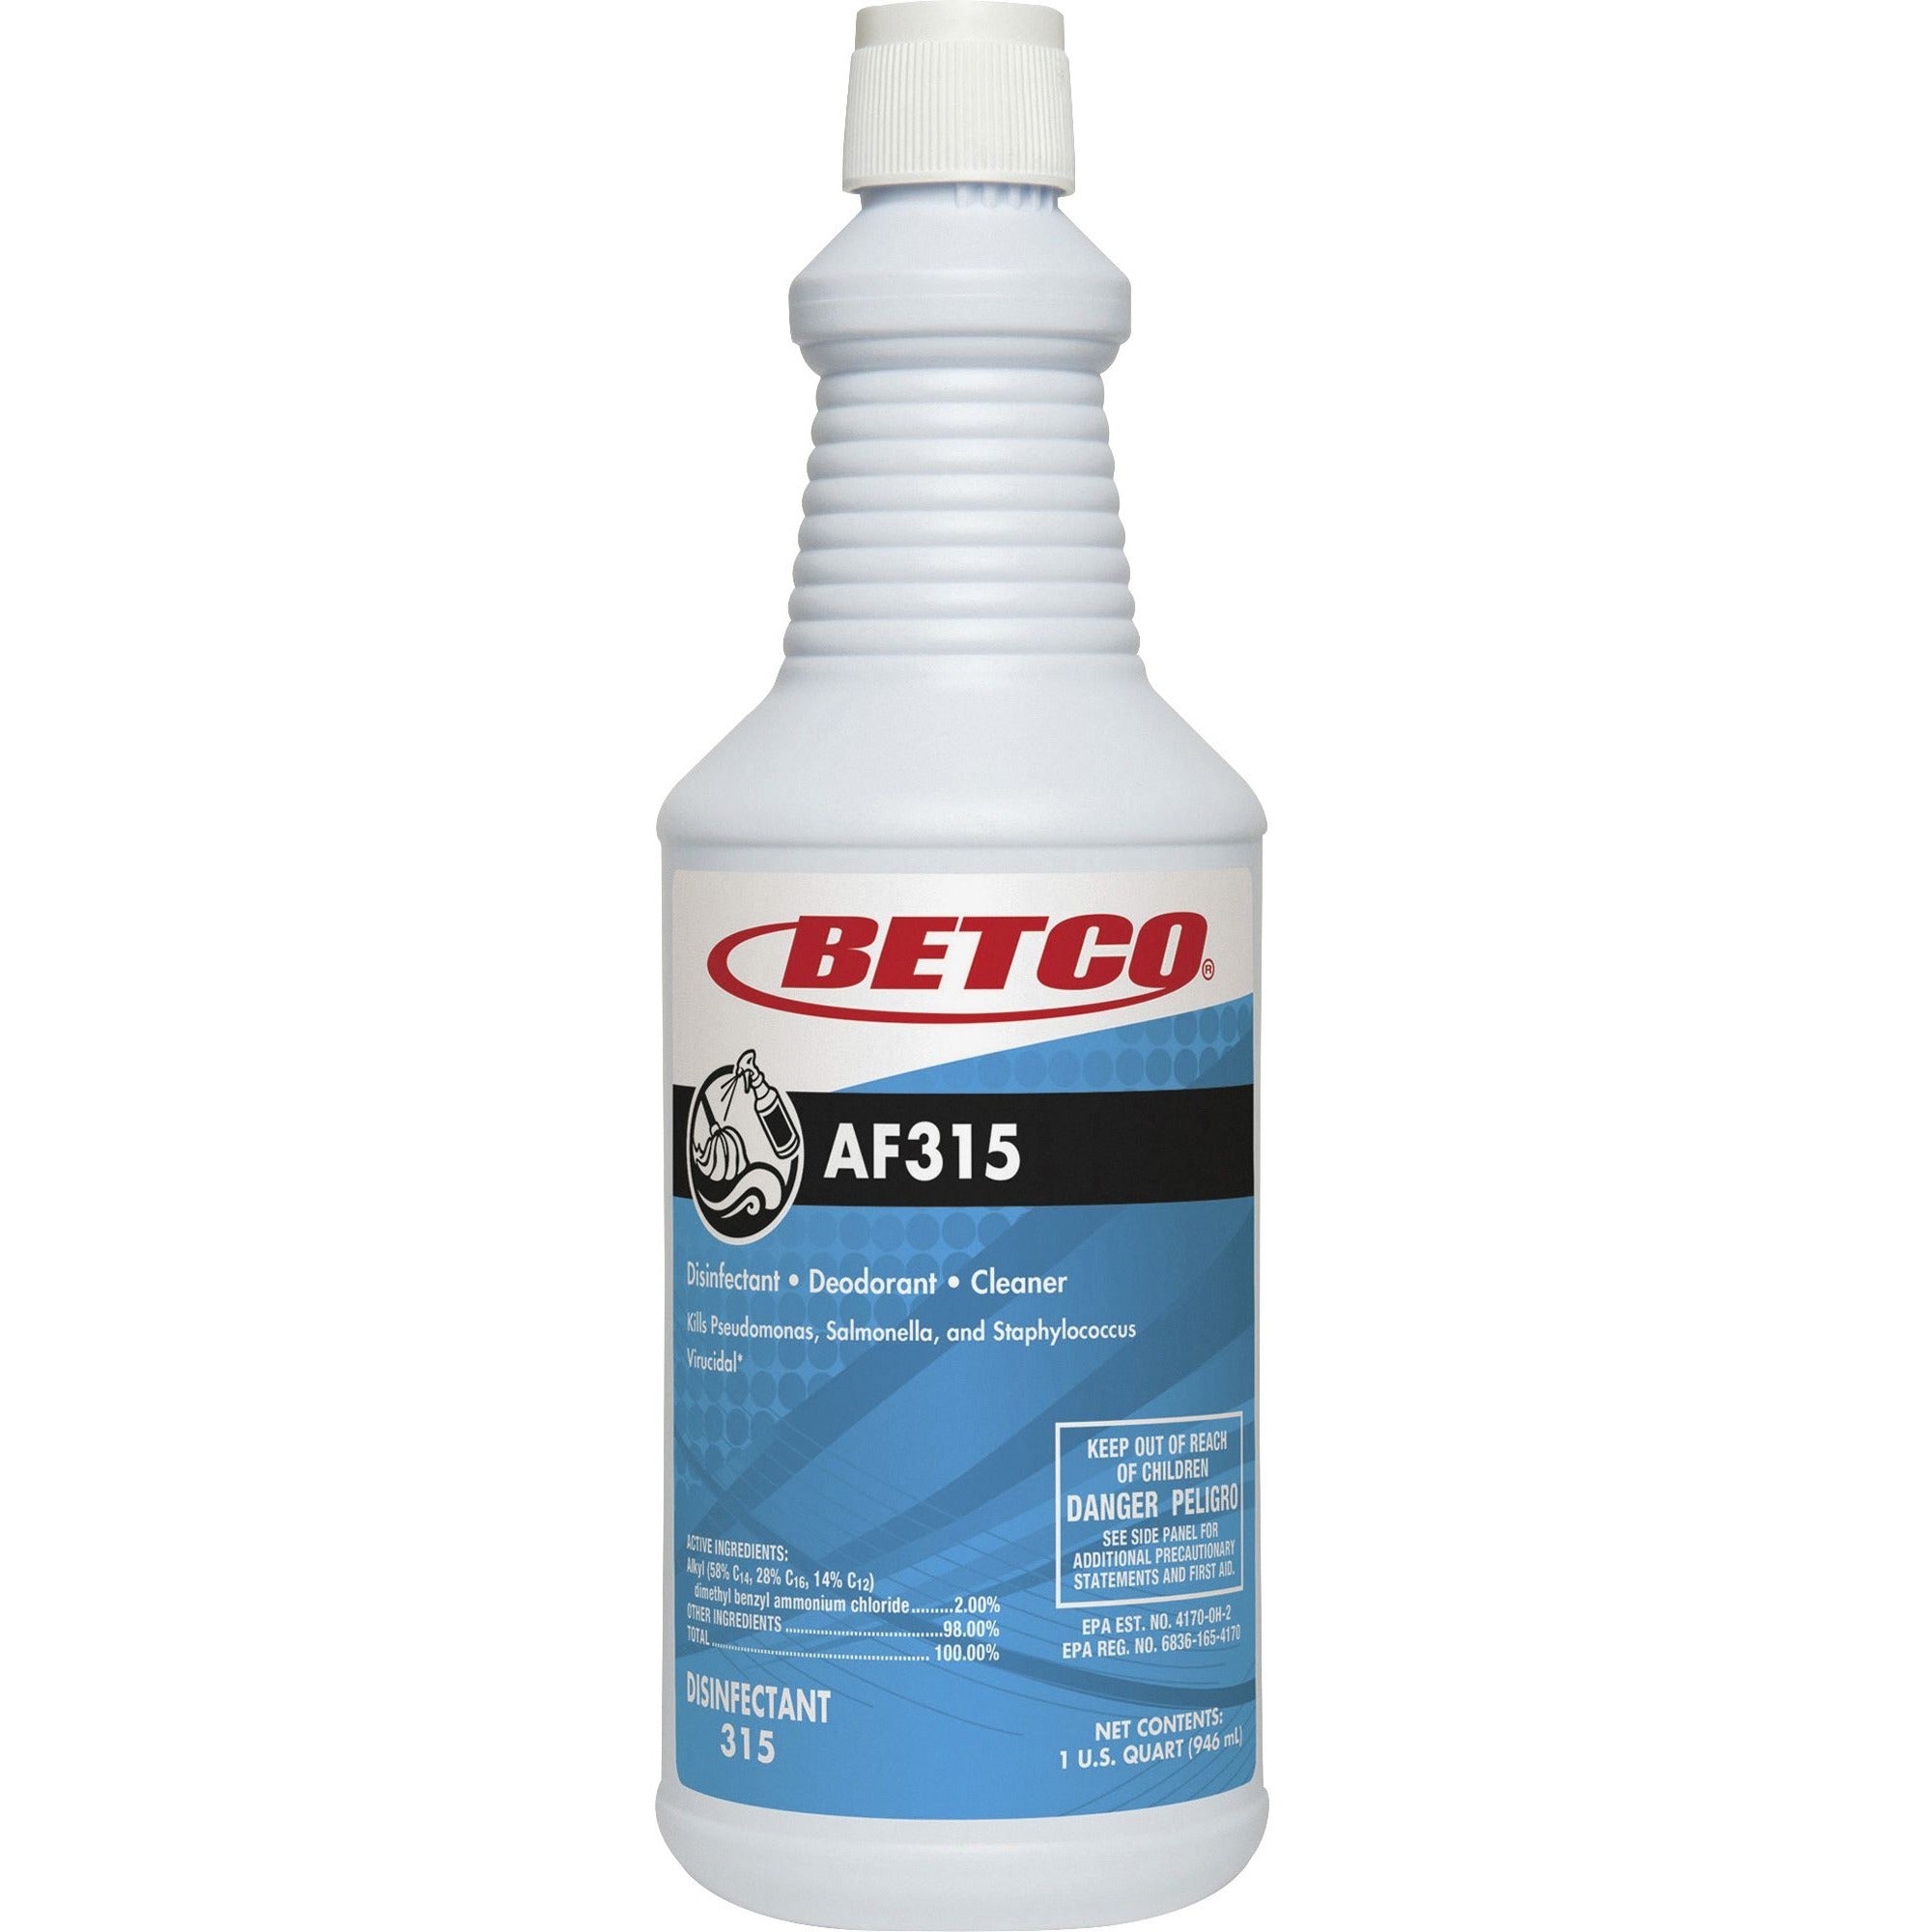 Betco AF315 Disinfectant Cleaner - Concentrate - 32 fl oz (1 quart) - Citrus Floral Scent - 12 / Carton - Deodorant, Detergent Resistant, pH Neutral, Long Lasting, Deodorize - Turquoise - 2